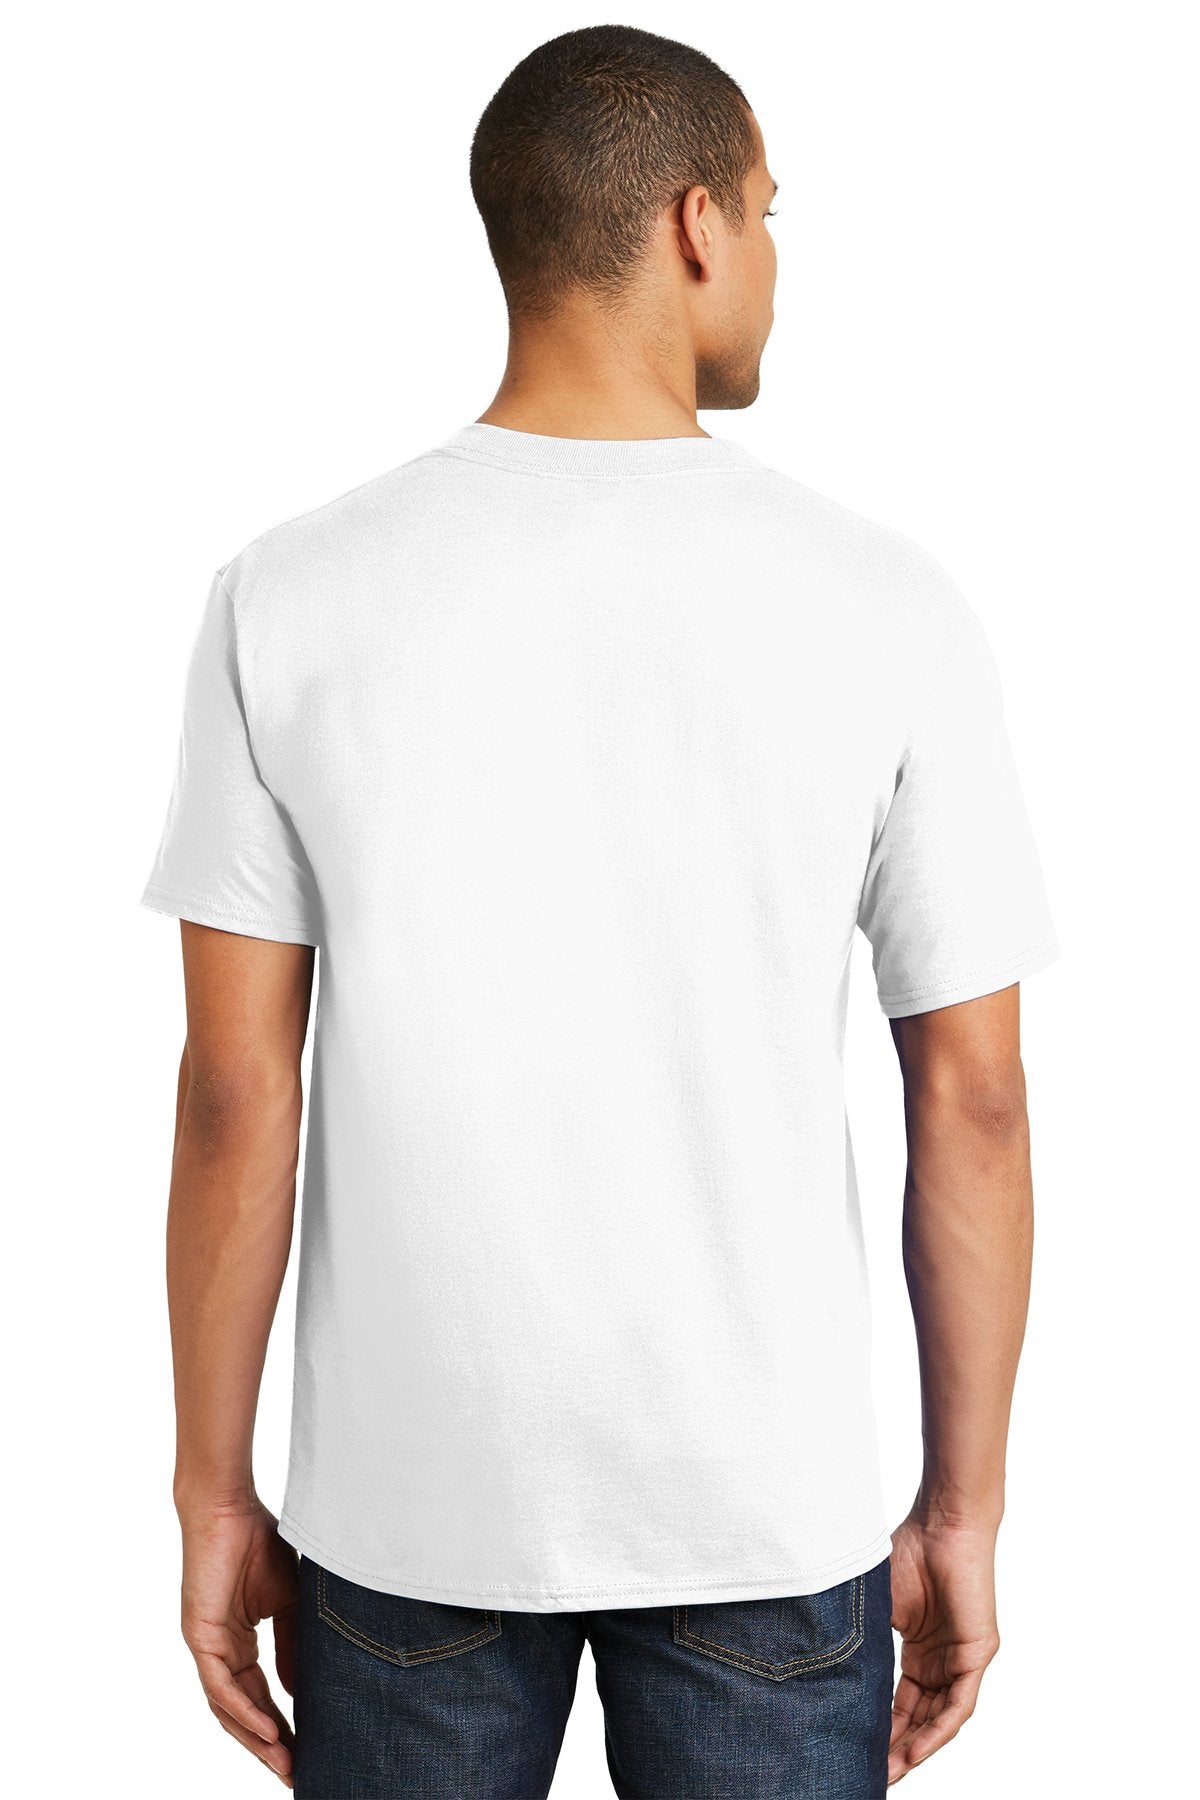 hanes beefy cotton t shirt 5180 white